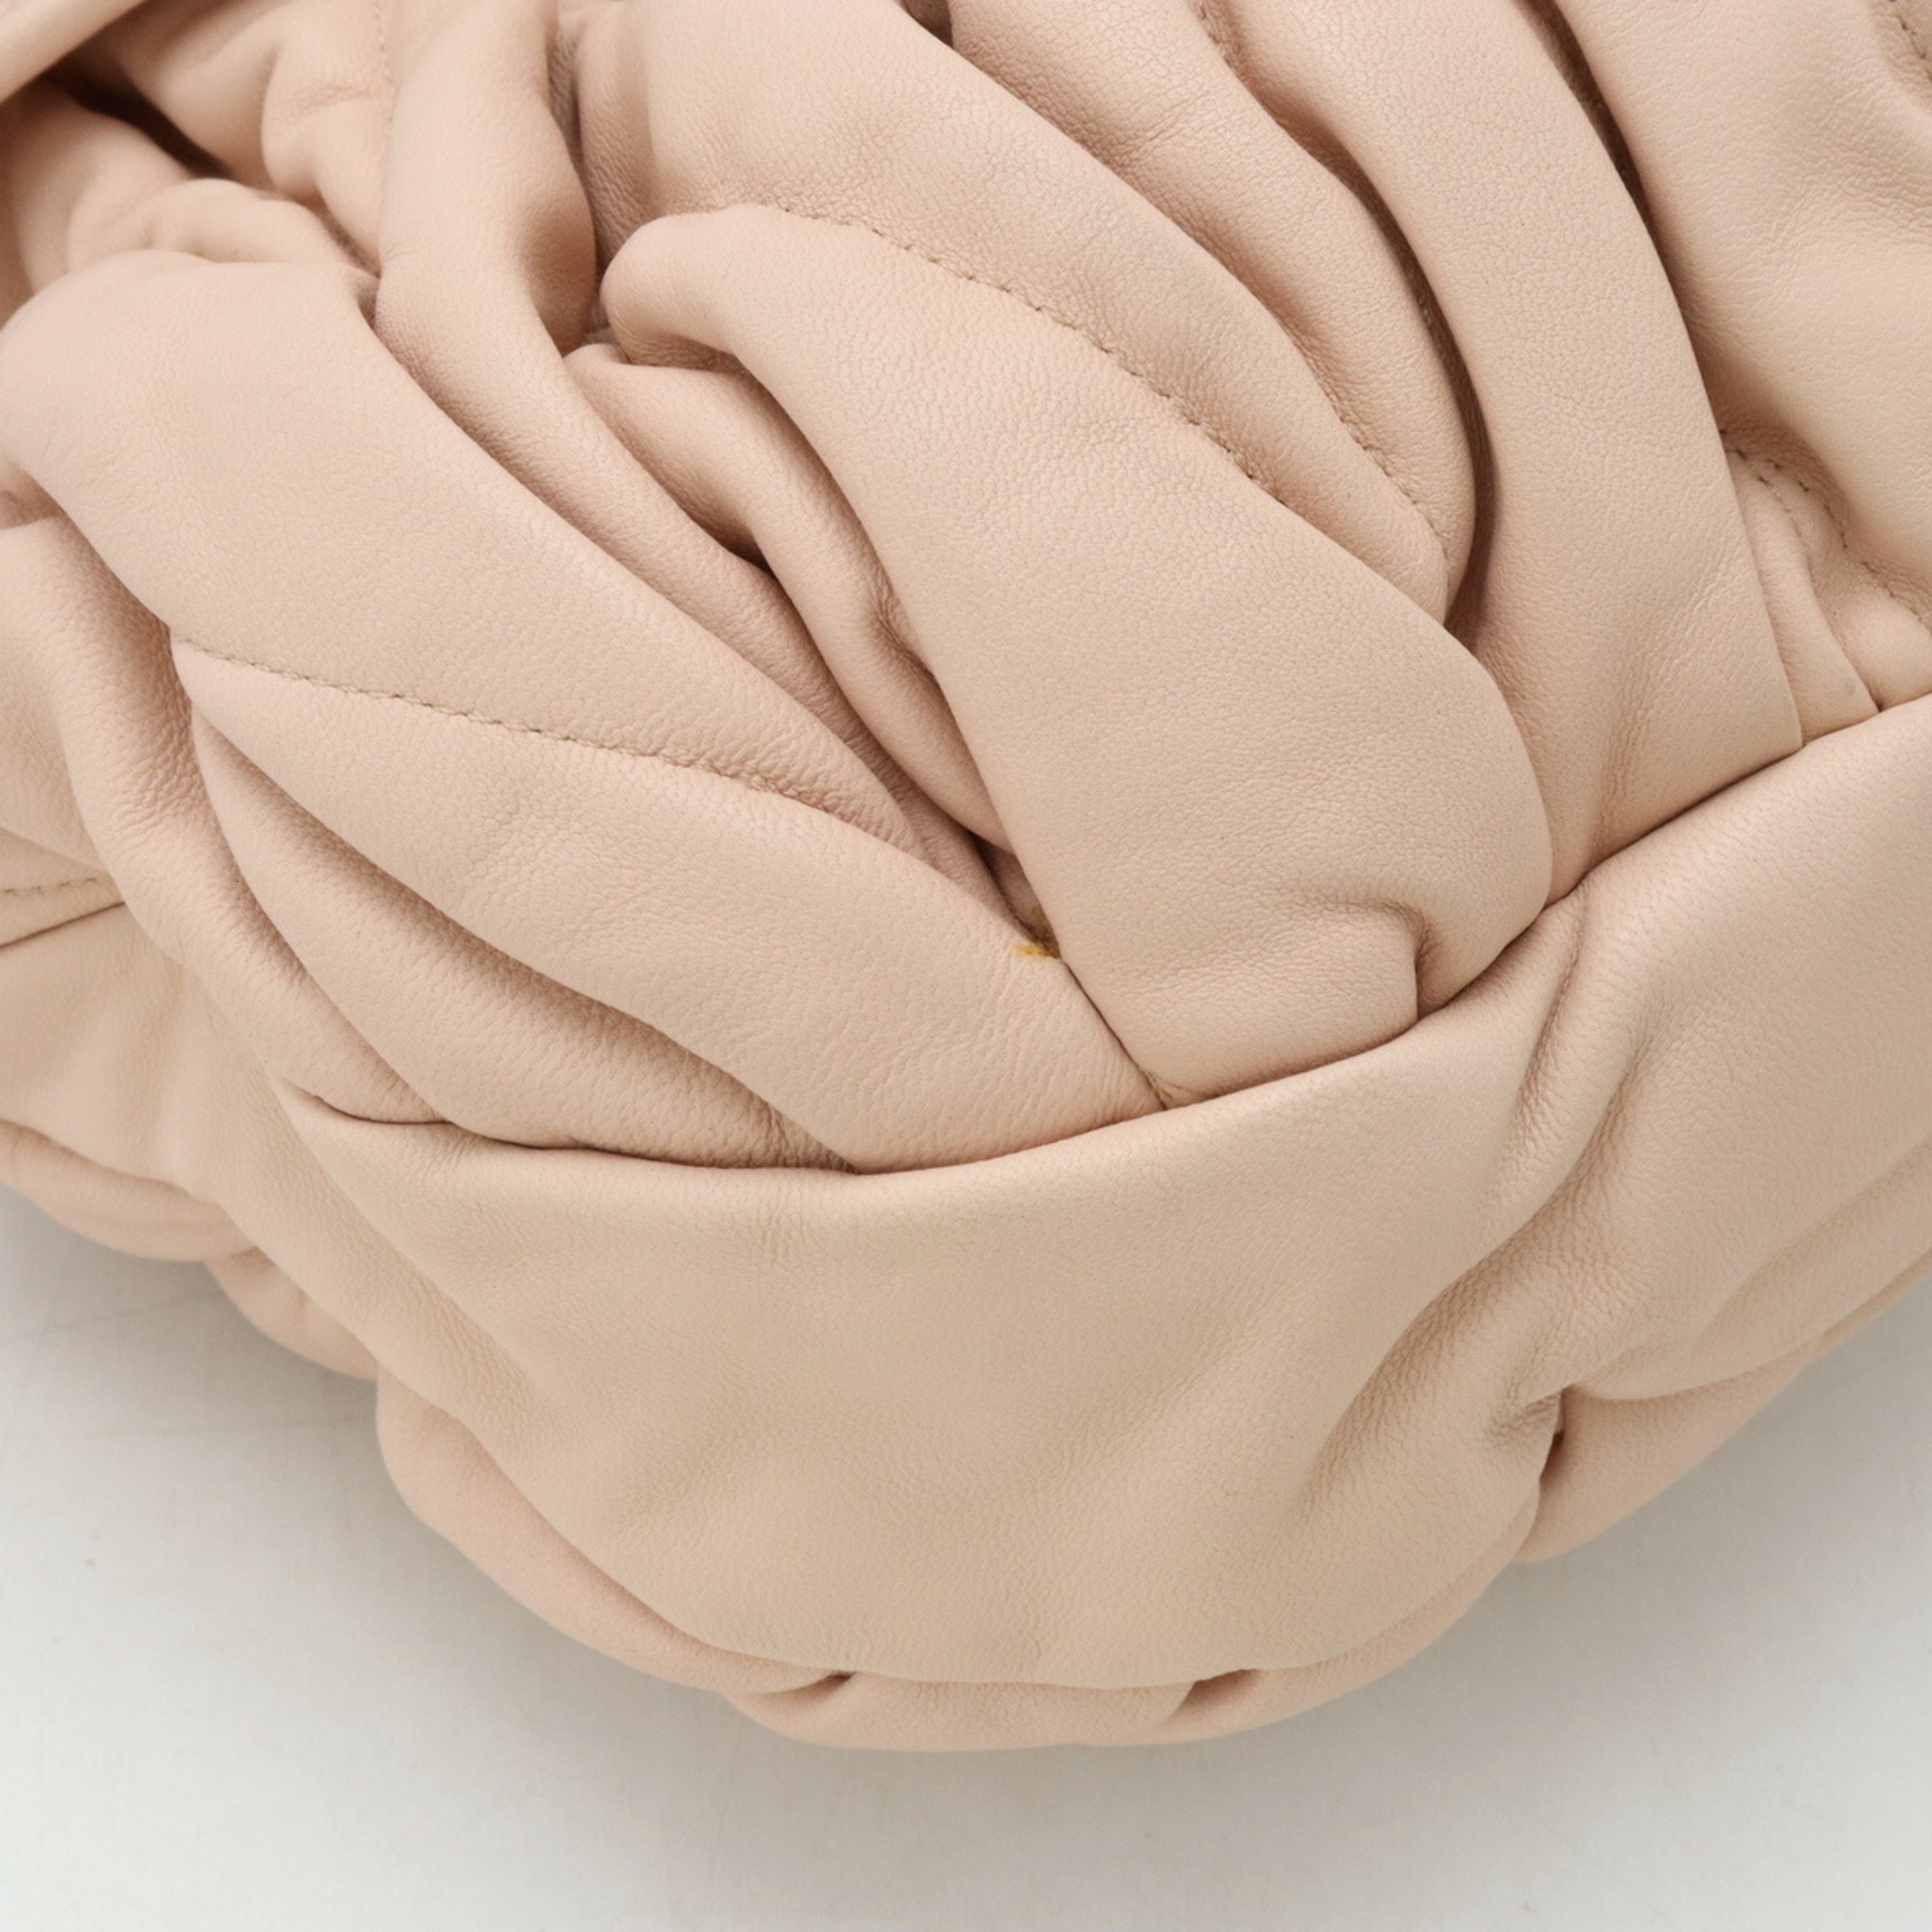 Miu Miu Miu Matelasse Handbag Shoulder Bag Gathered Leather Light Pink RR1300